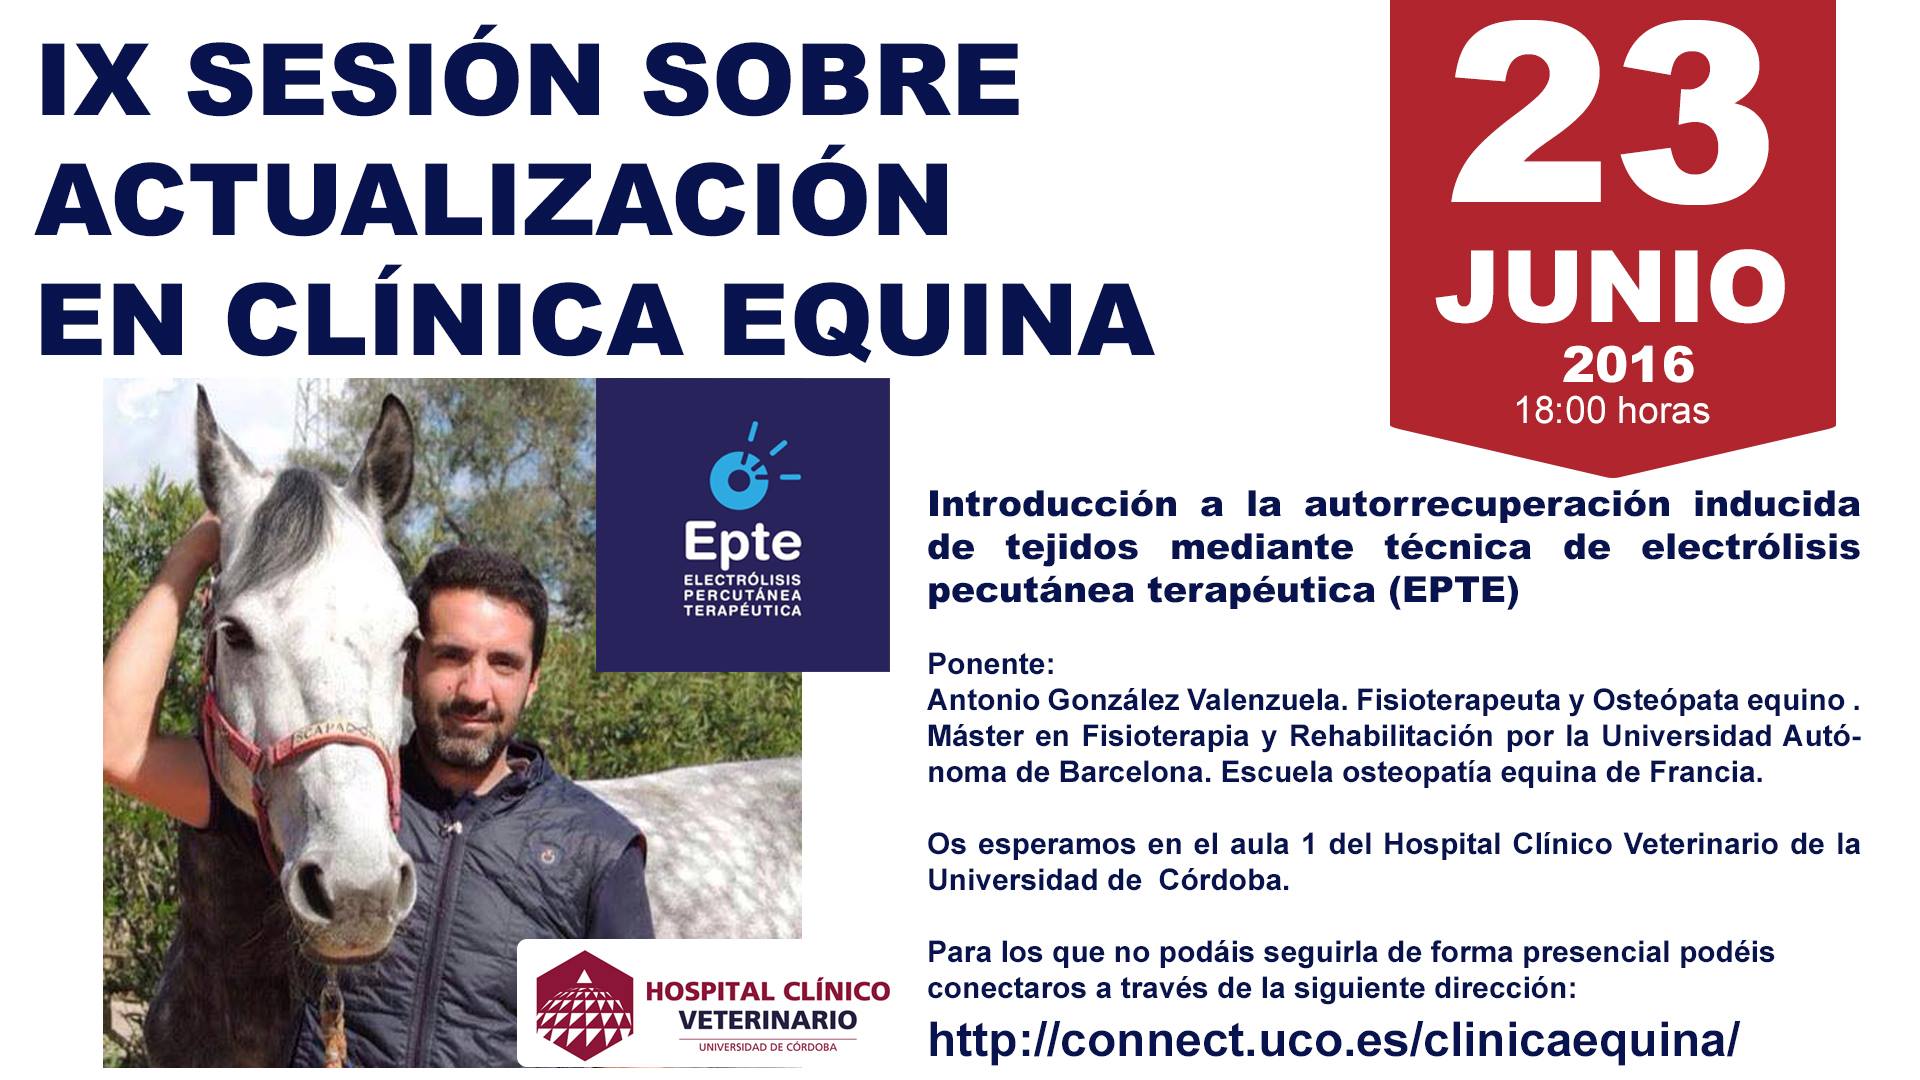 IX_sesion_sobre_actualizacion_en_clinica_equina_23_junio_2016